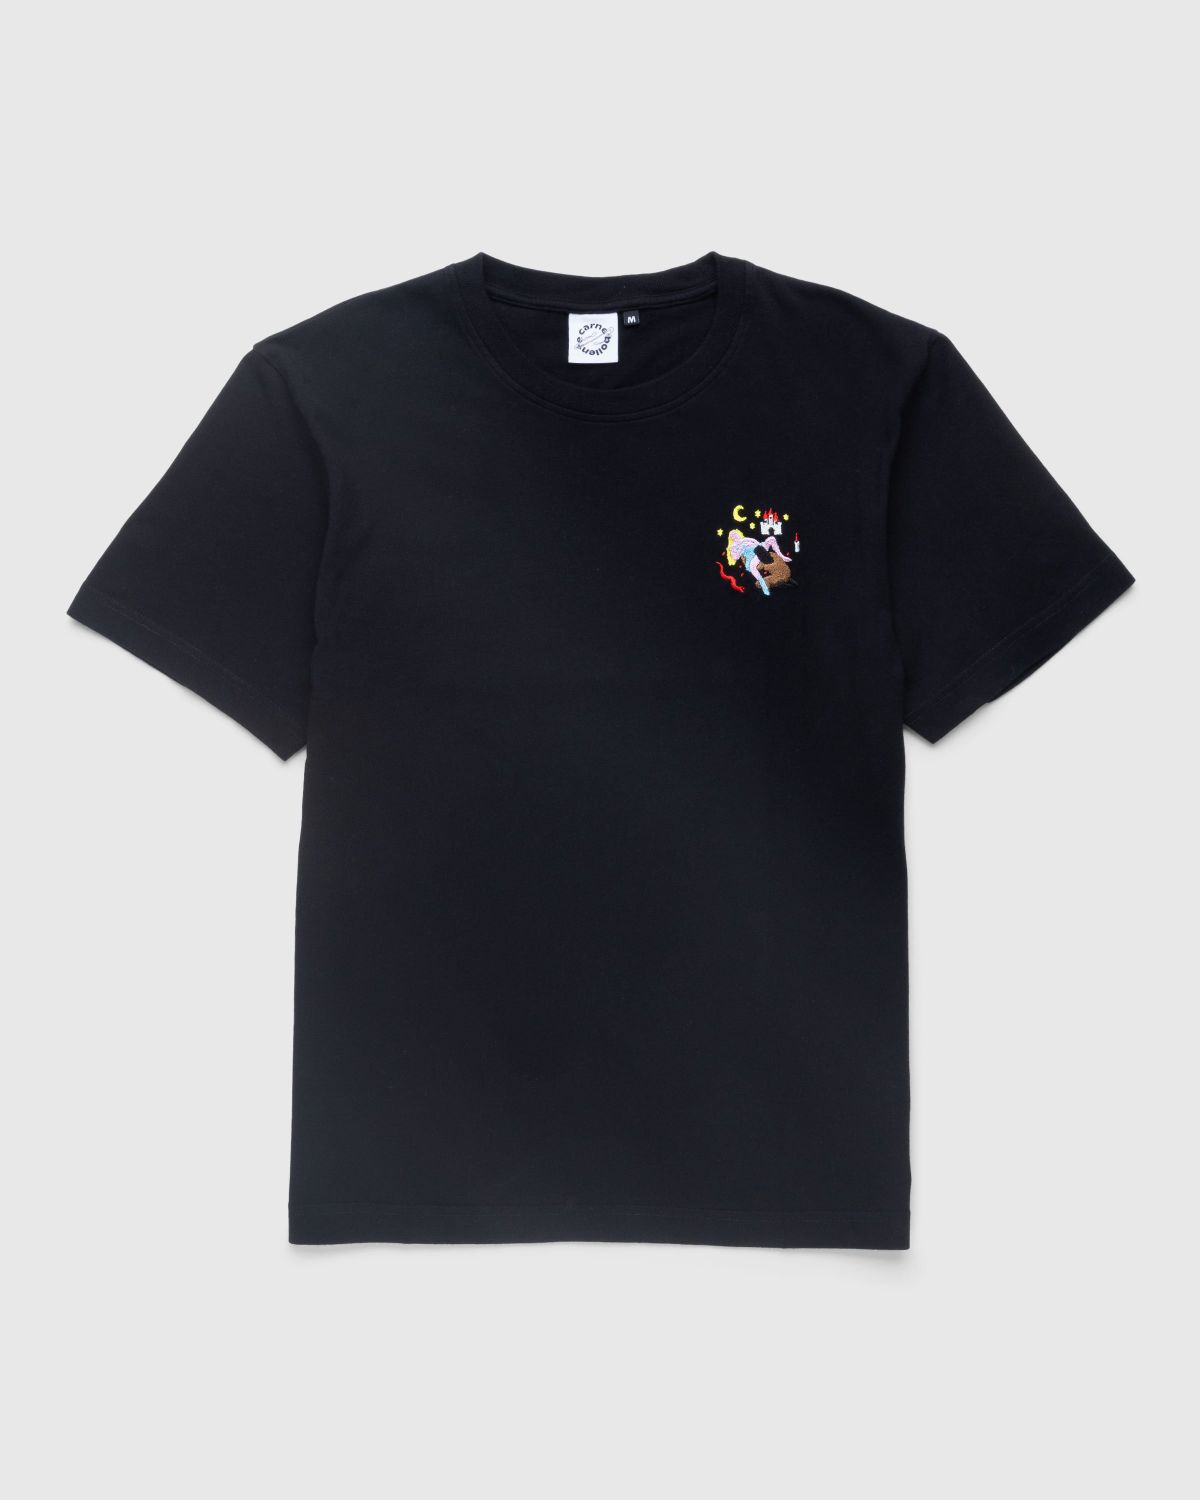 Carne Bollente – Middle Edging T-Shirt Black - T-shirts - Black - Image 1